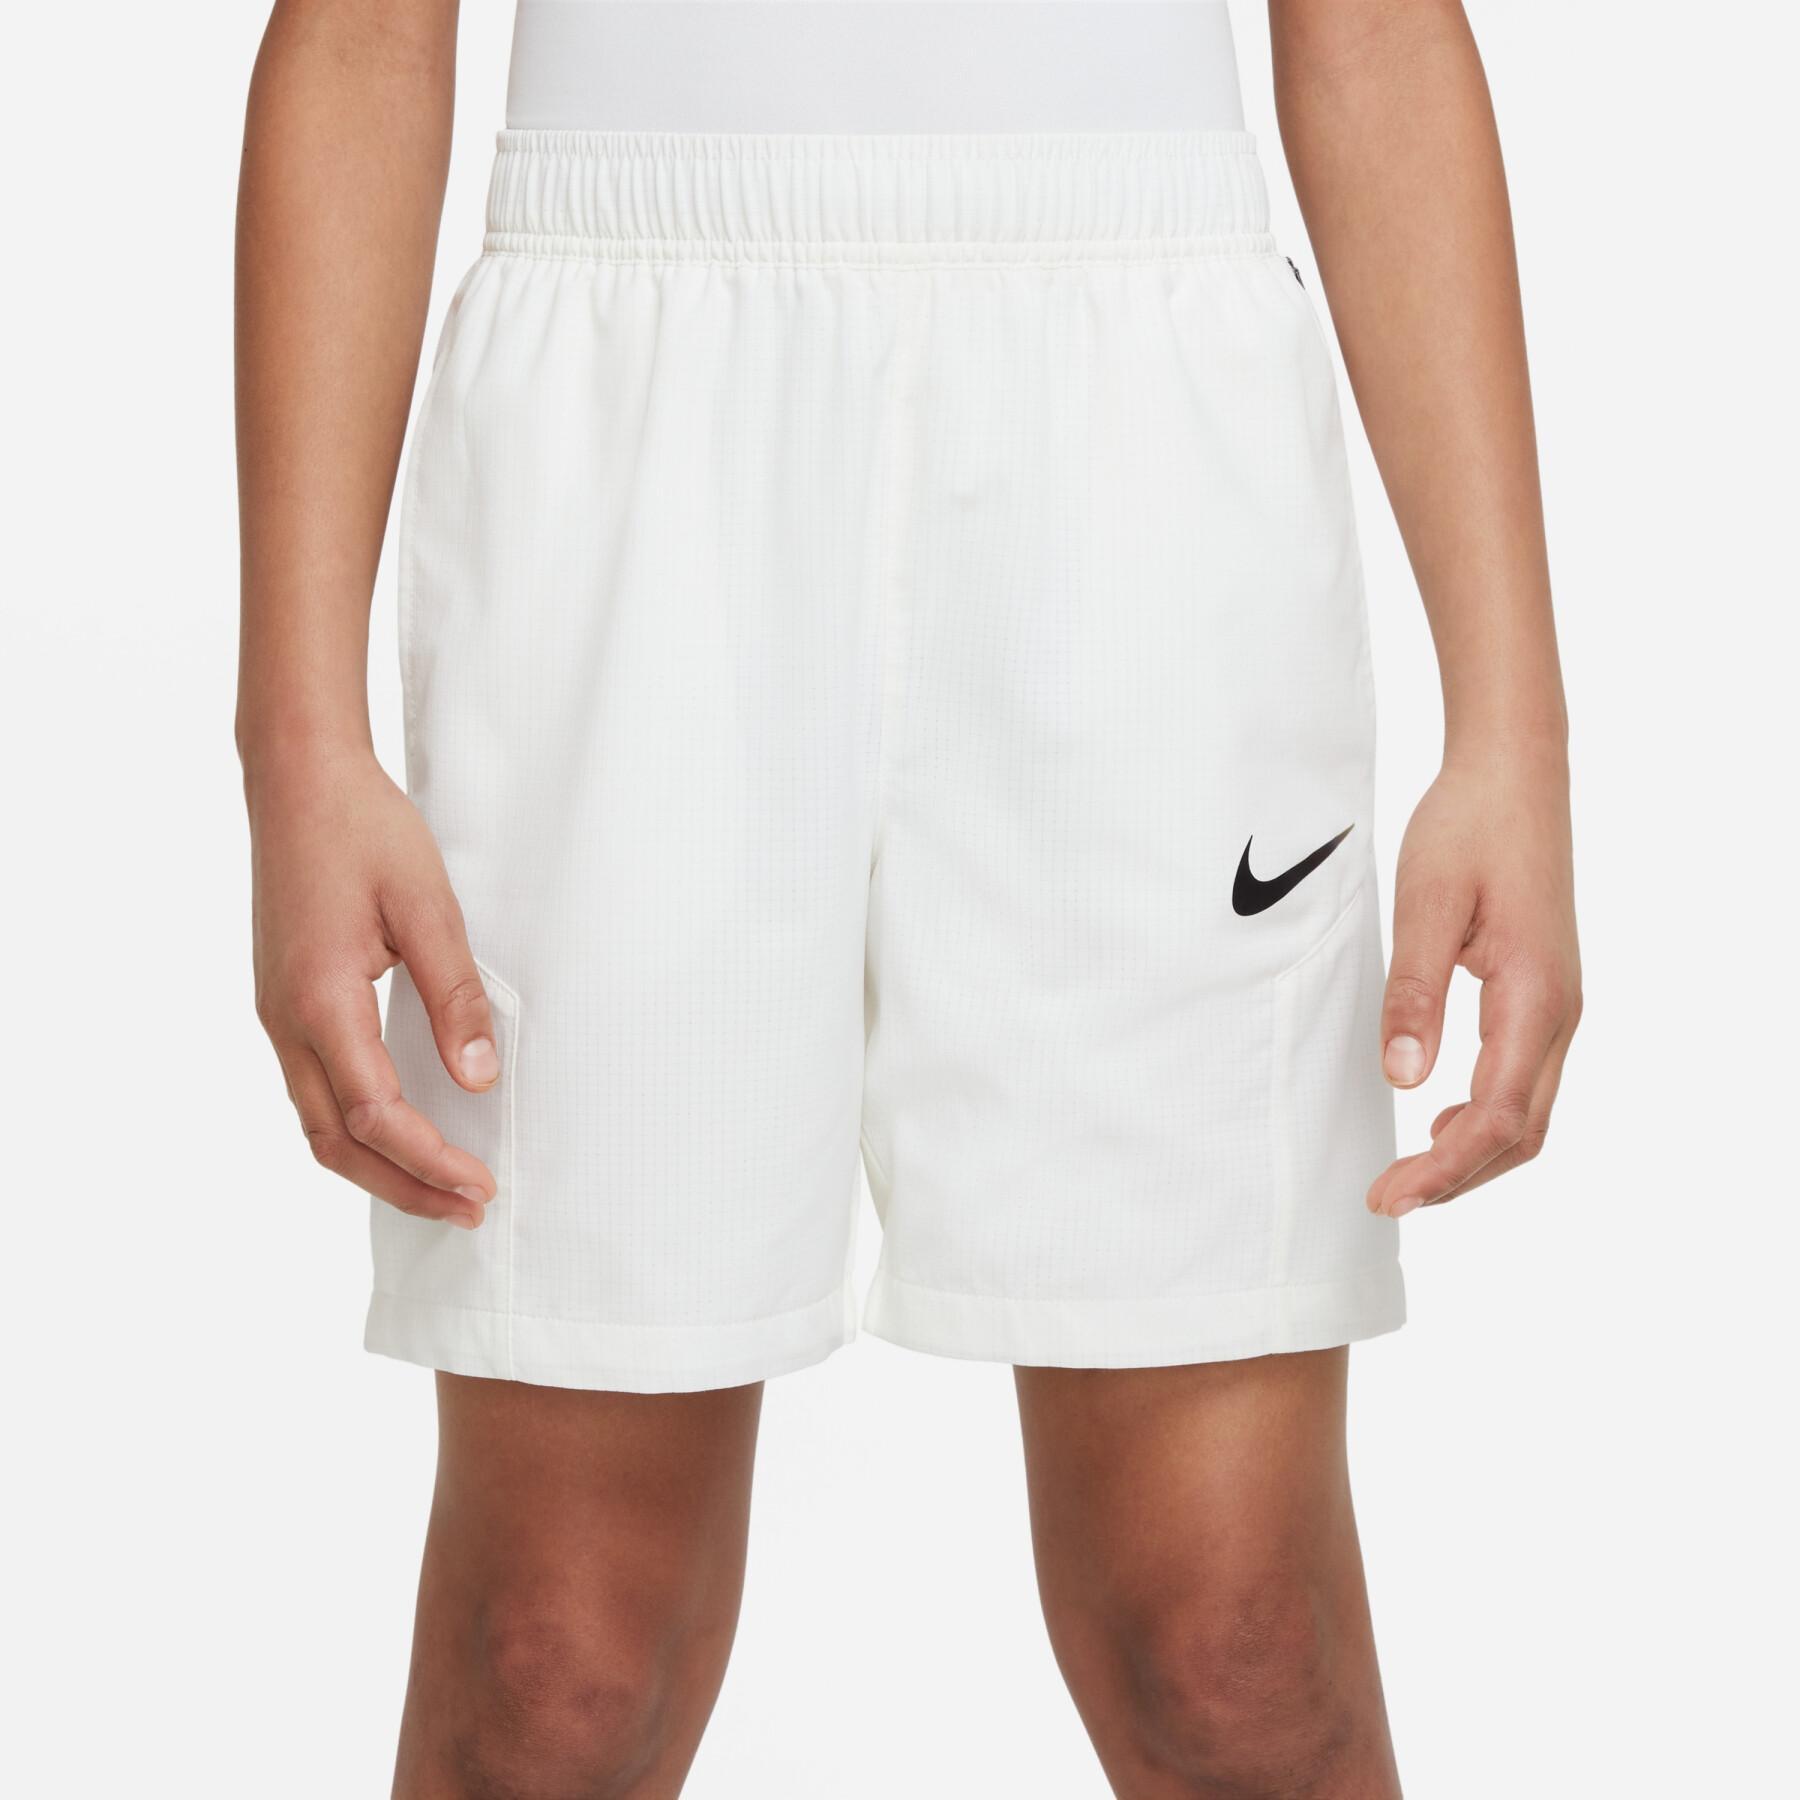 Kinder shorts Nike Instacool